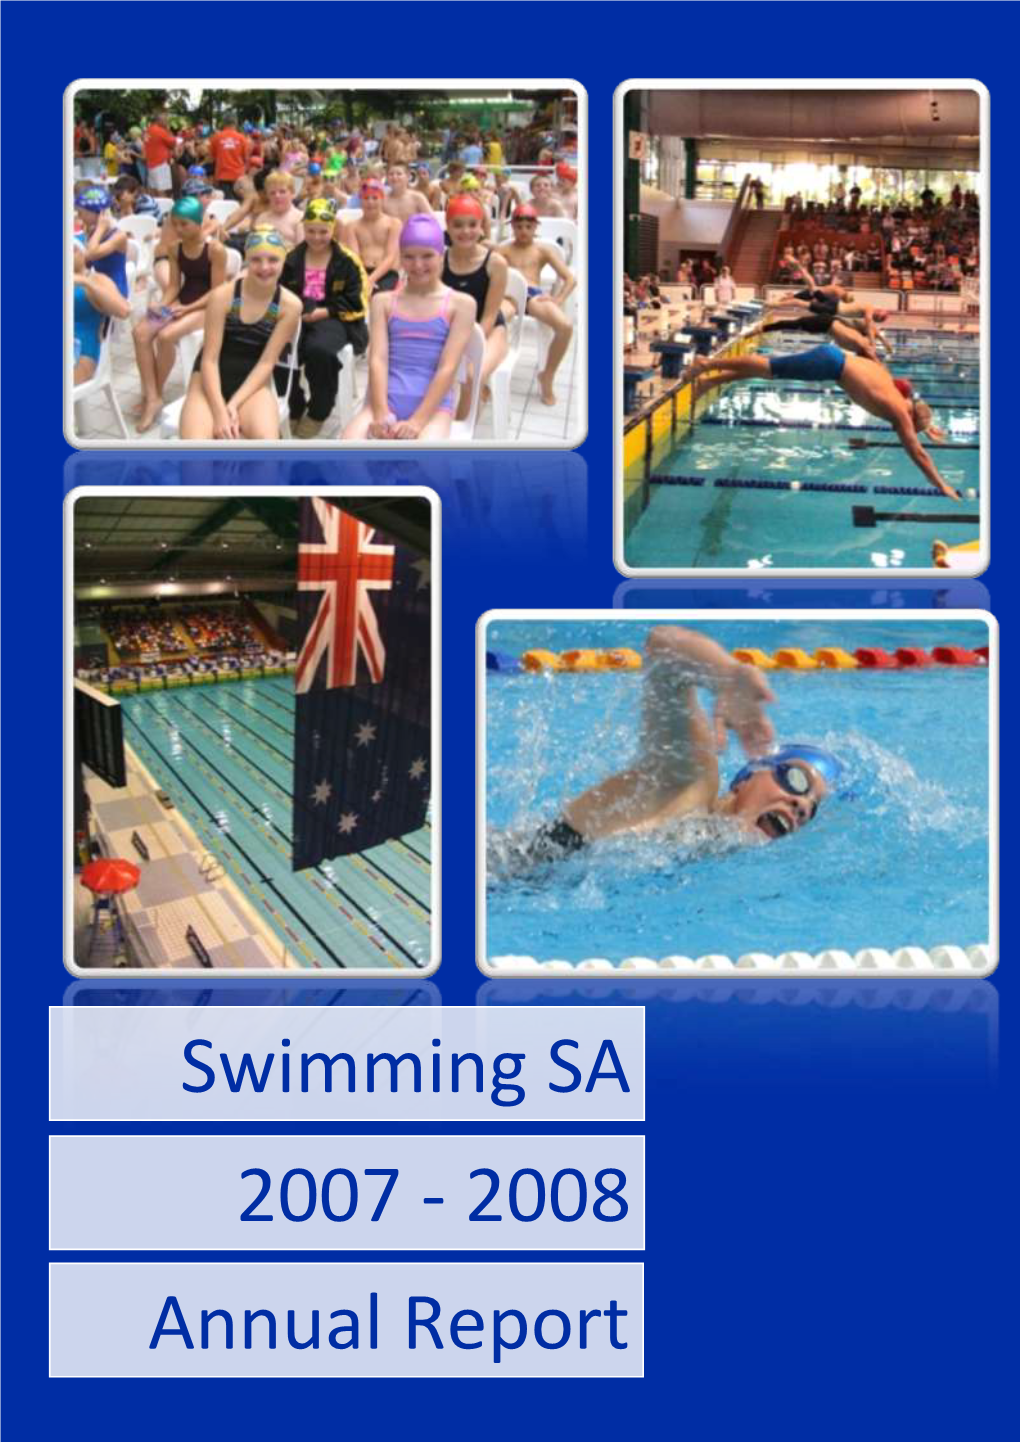 2006/2007 Annual Report